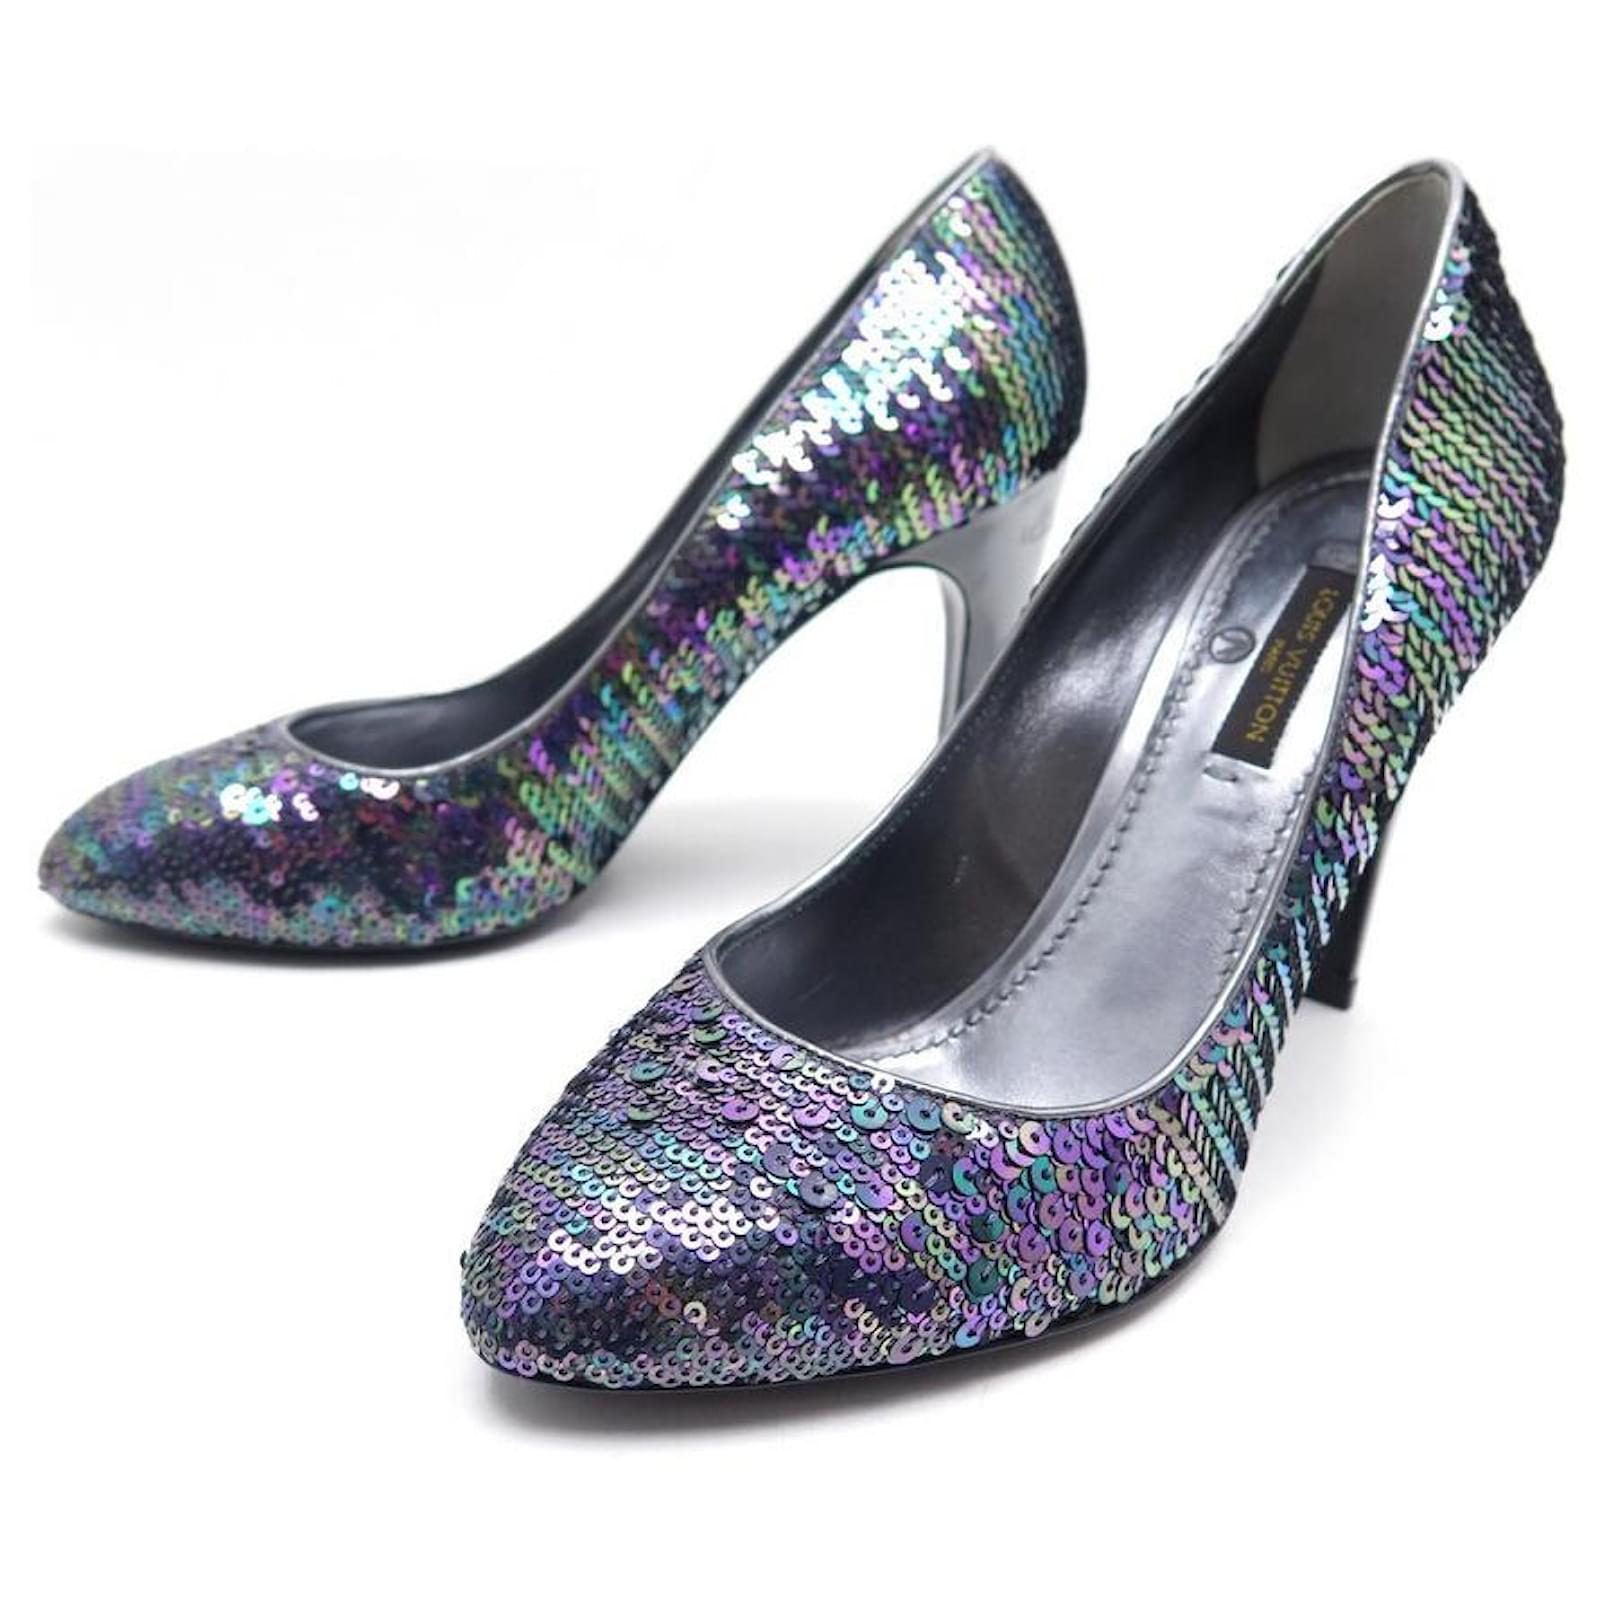 Louis Vuitton Silver Heels for Women